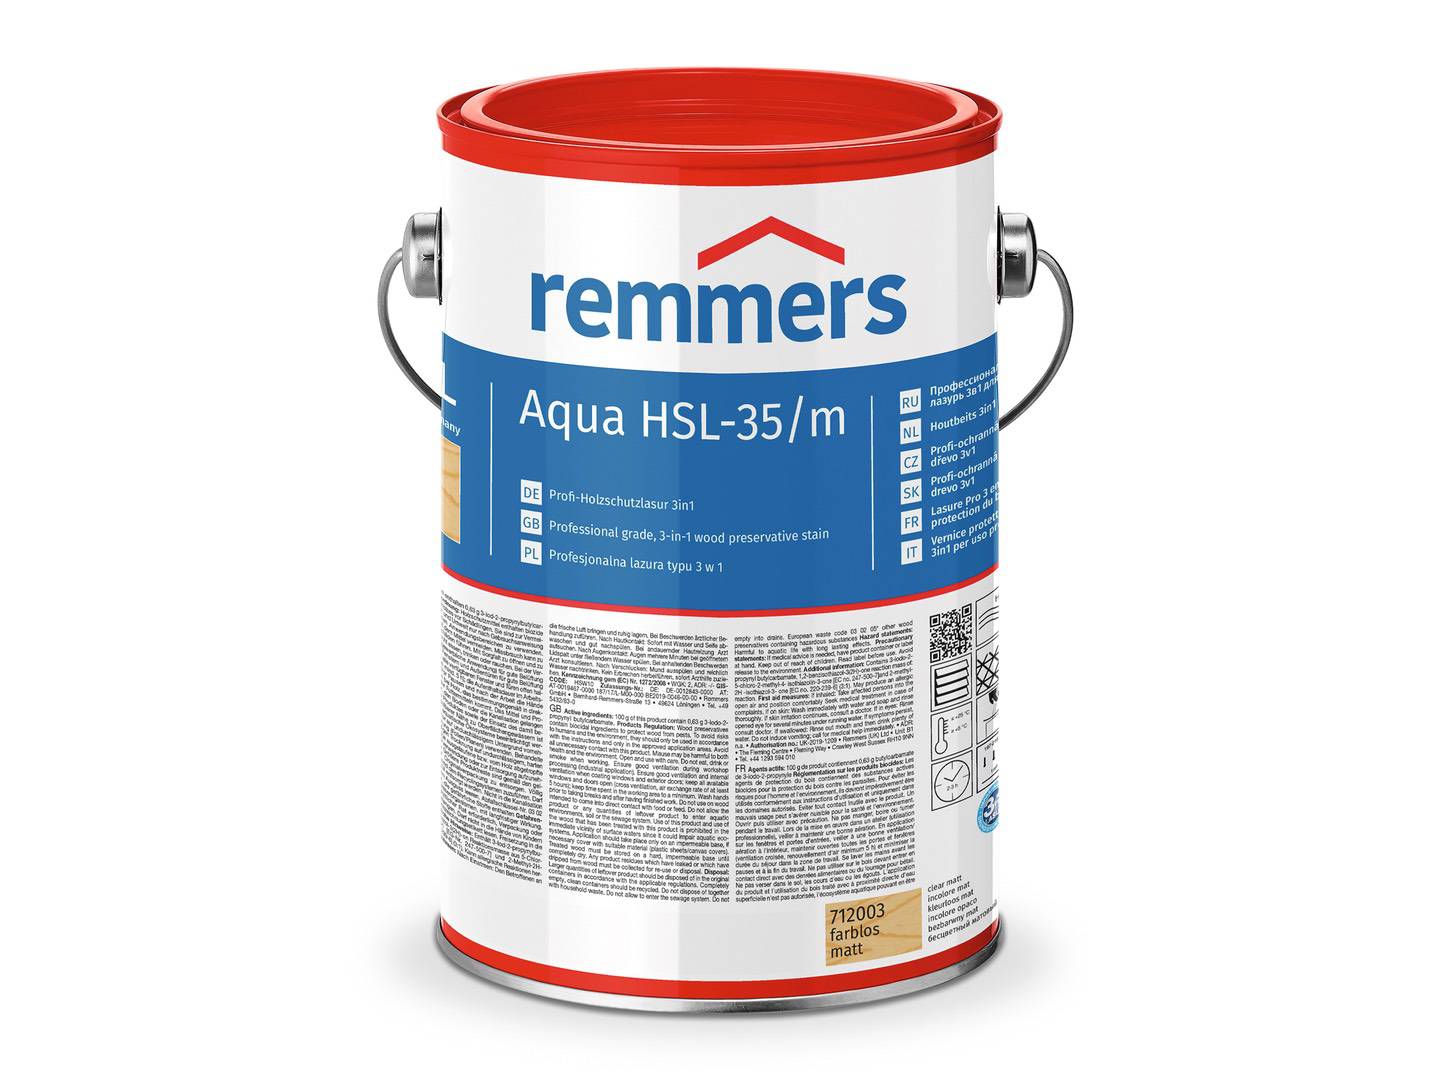 REMMERS Aqua HSL-35/m-Profi-Holzschutz-Lasur 3in1 teak (RC-545) 5 l